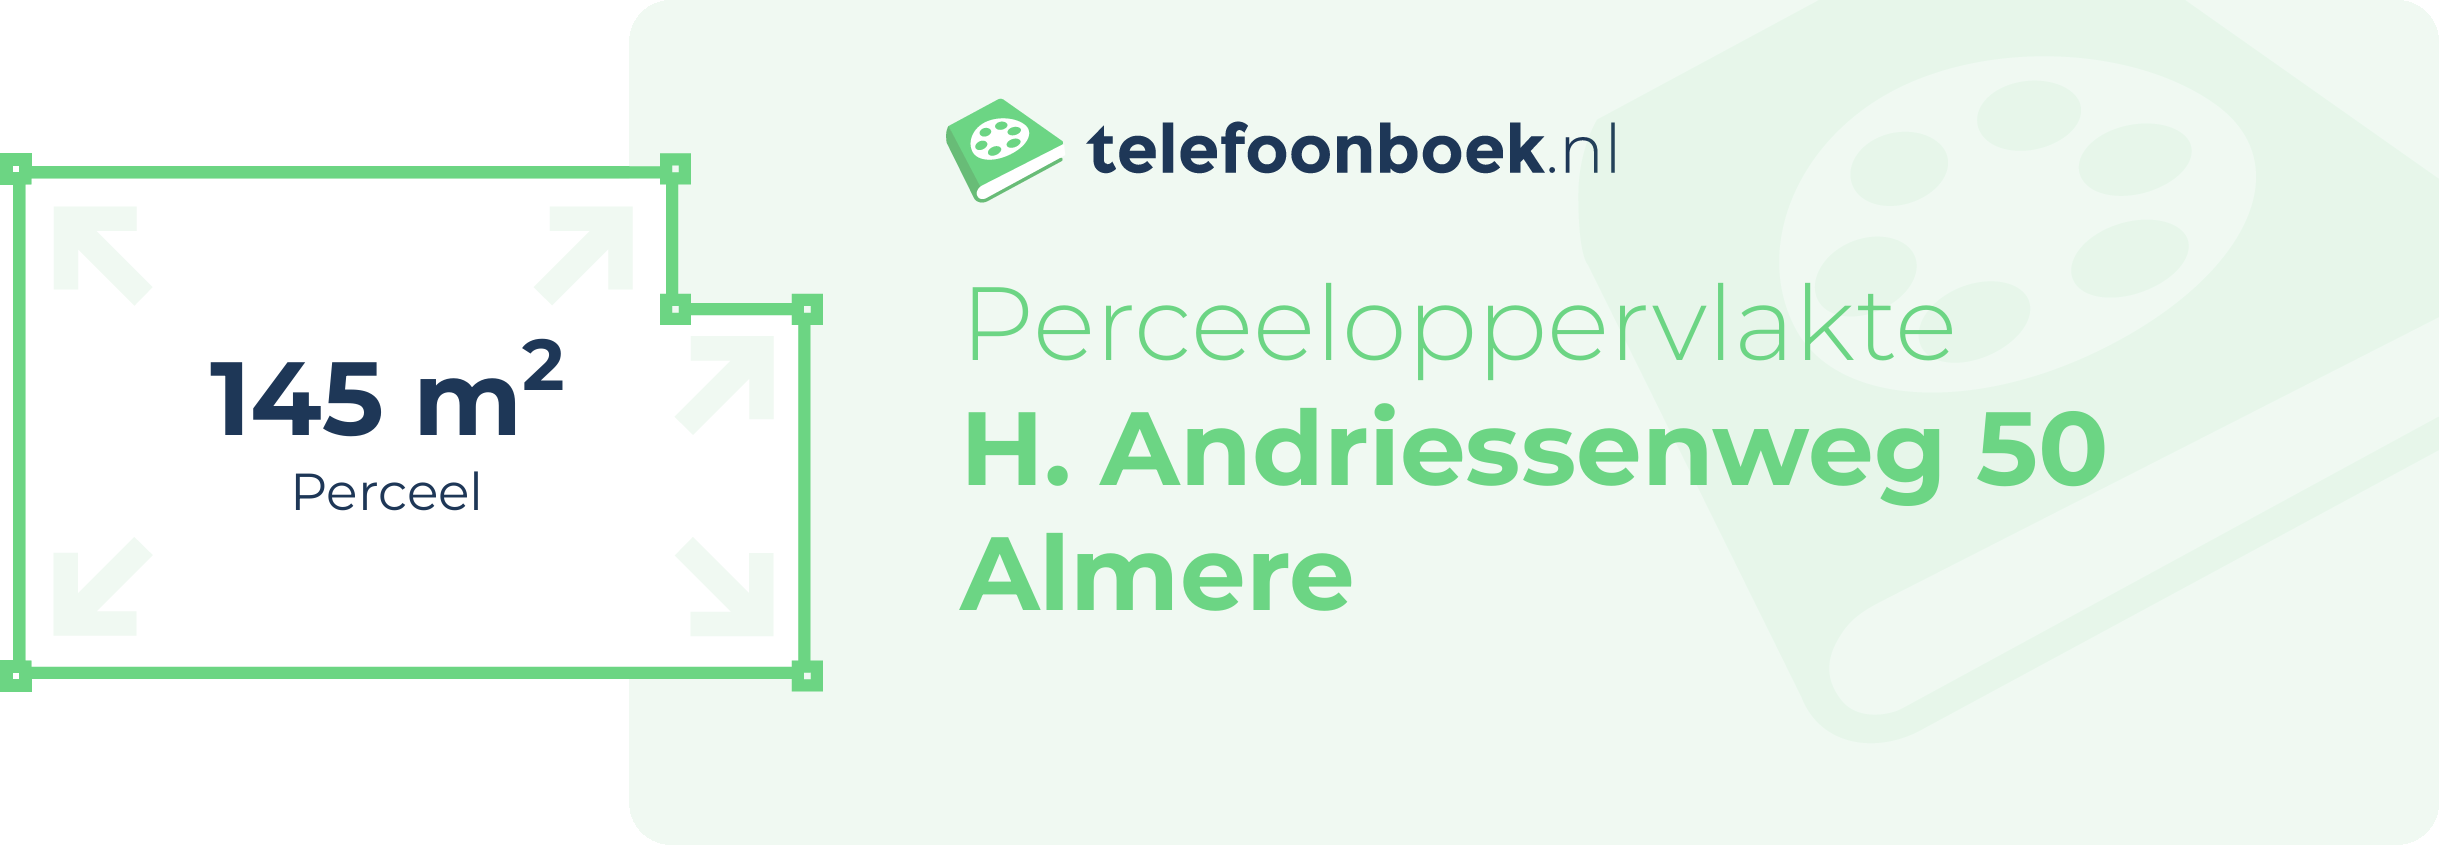 Perceeloppervlakte H. Andriessenweg 50 Almere